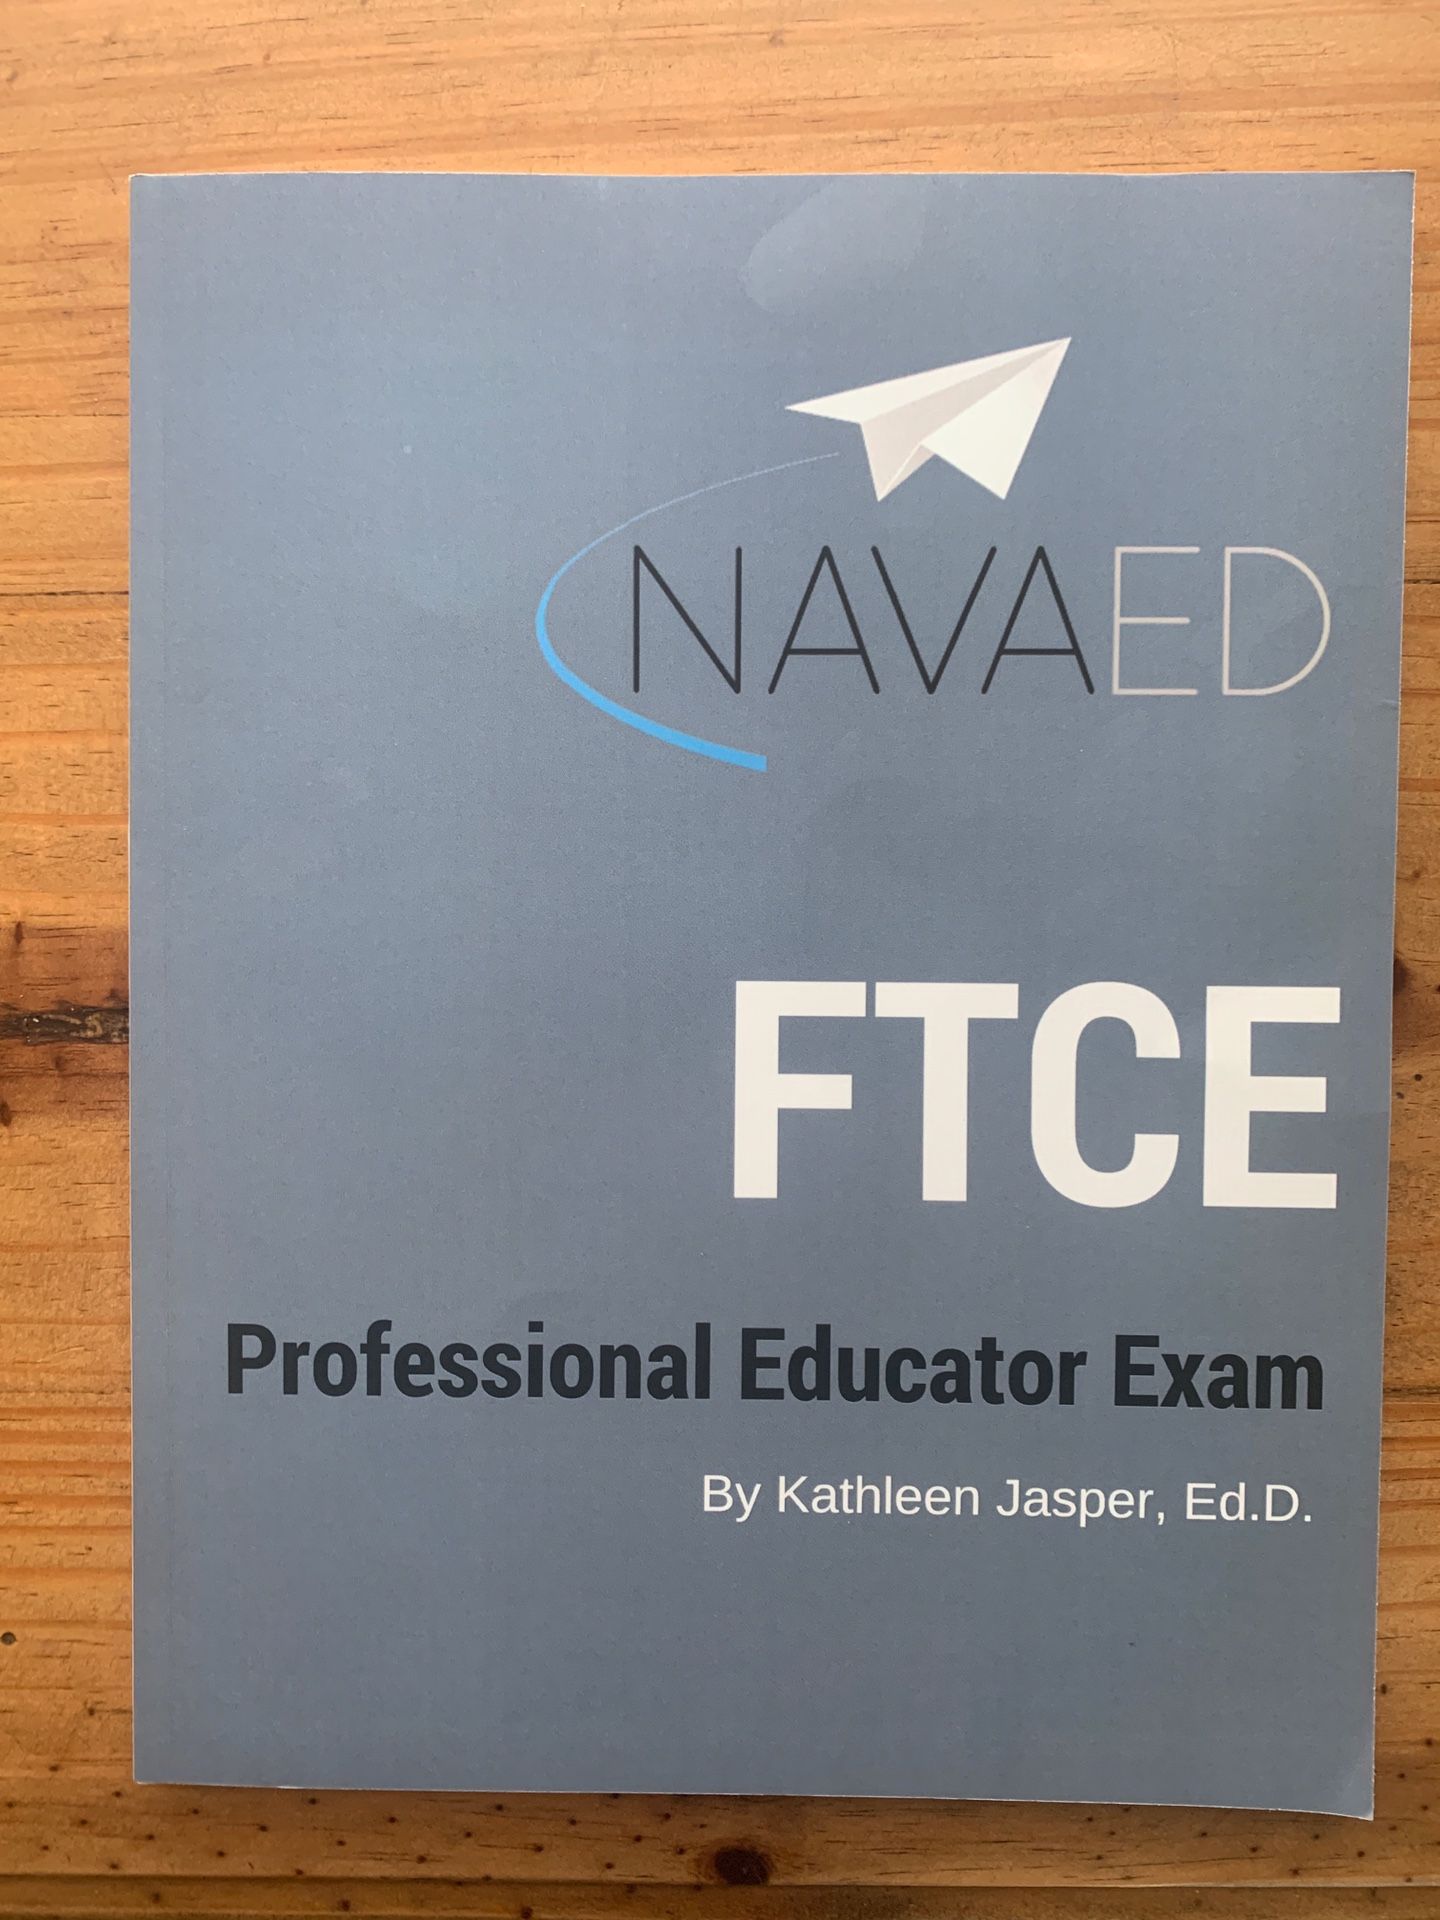 NAVAED FTCE Professional Educator Exam Study book